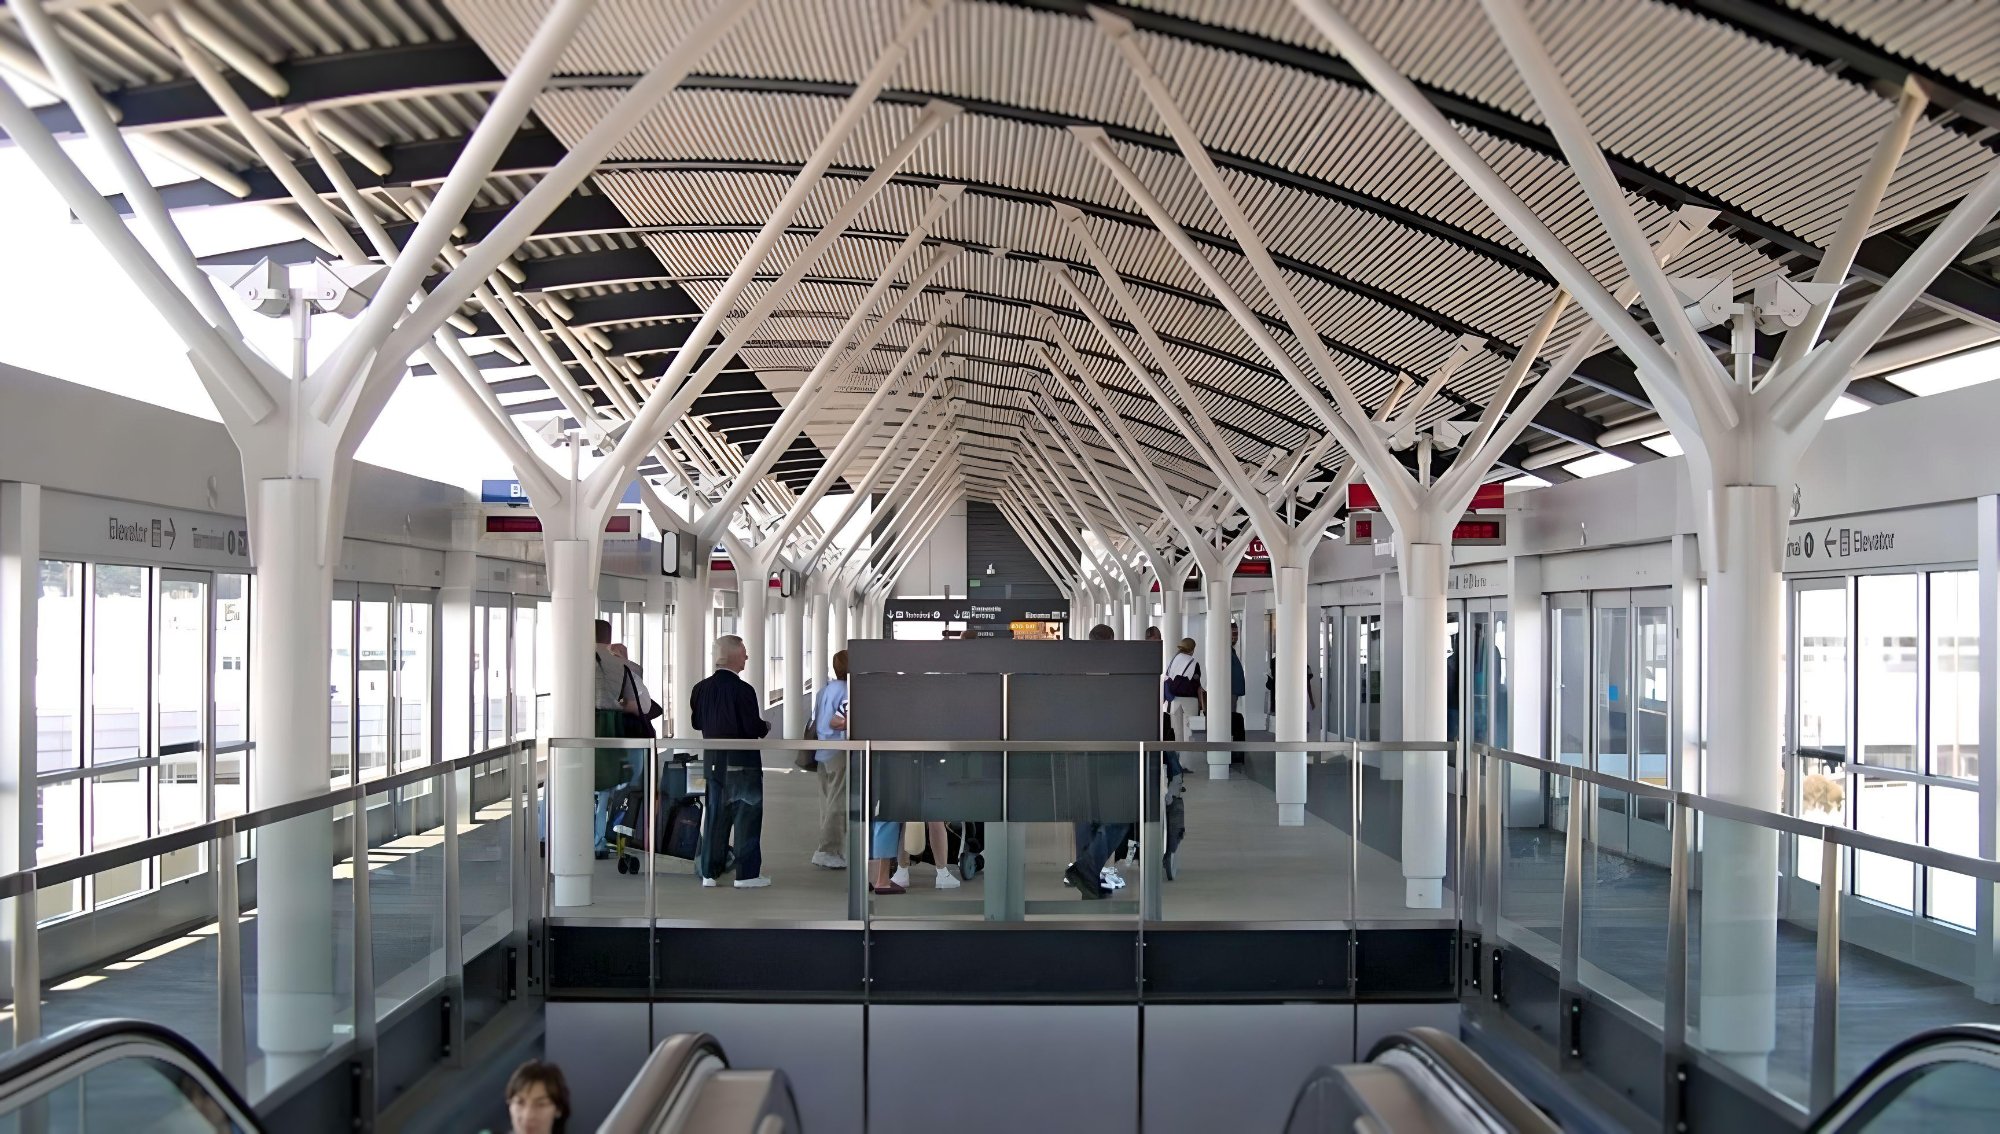 lda-architects-sfo-airport-rail-transit-center-02.jpg